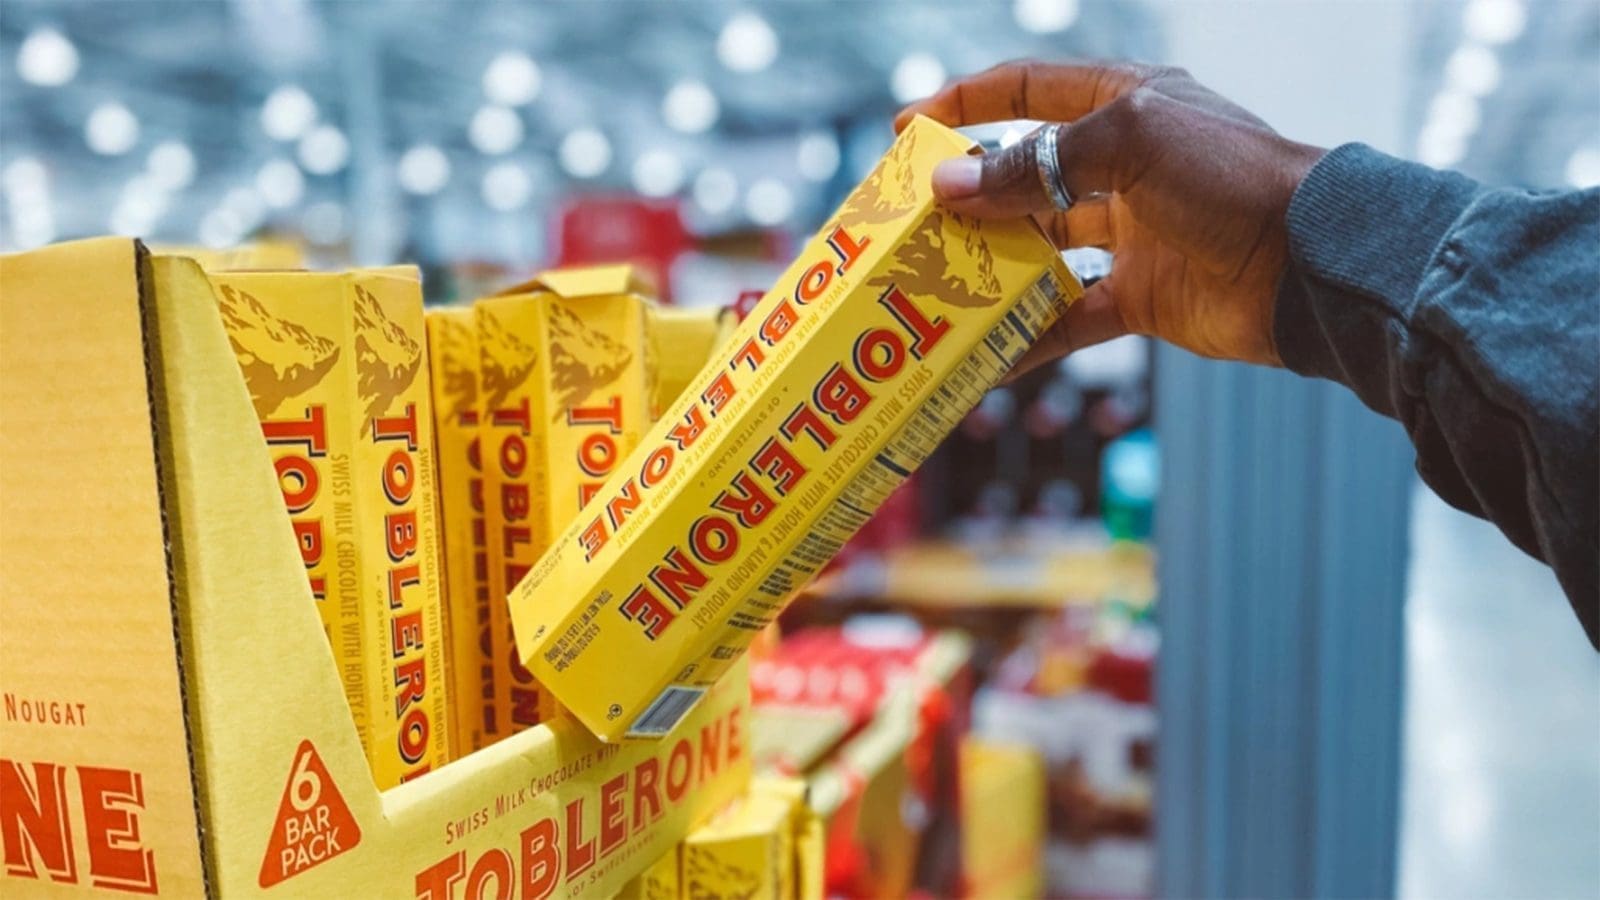 Rwanda Food and Drugs Authority bans sale of Toblerone chocolate